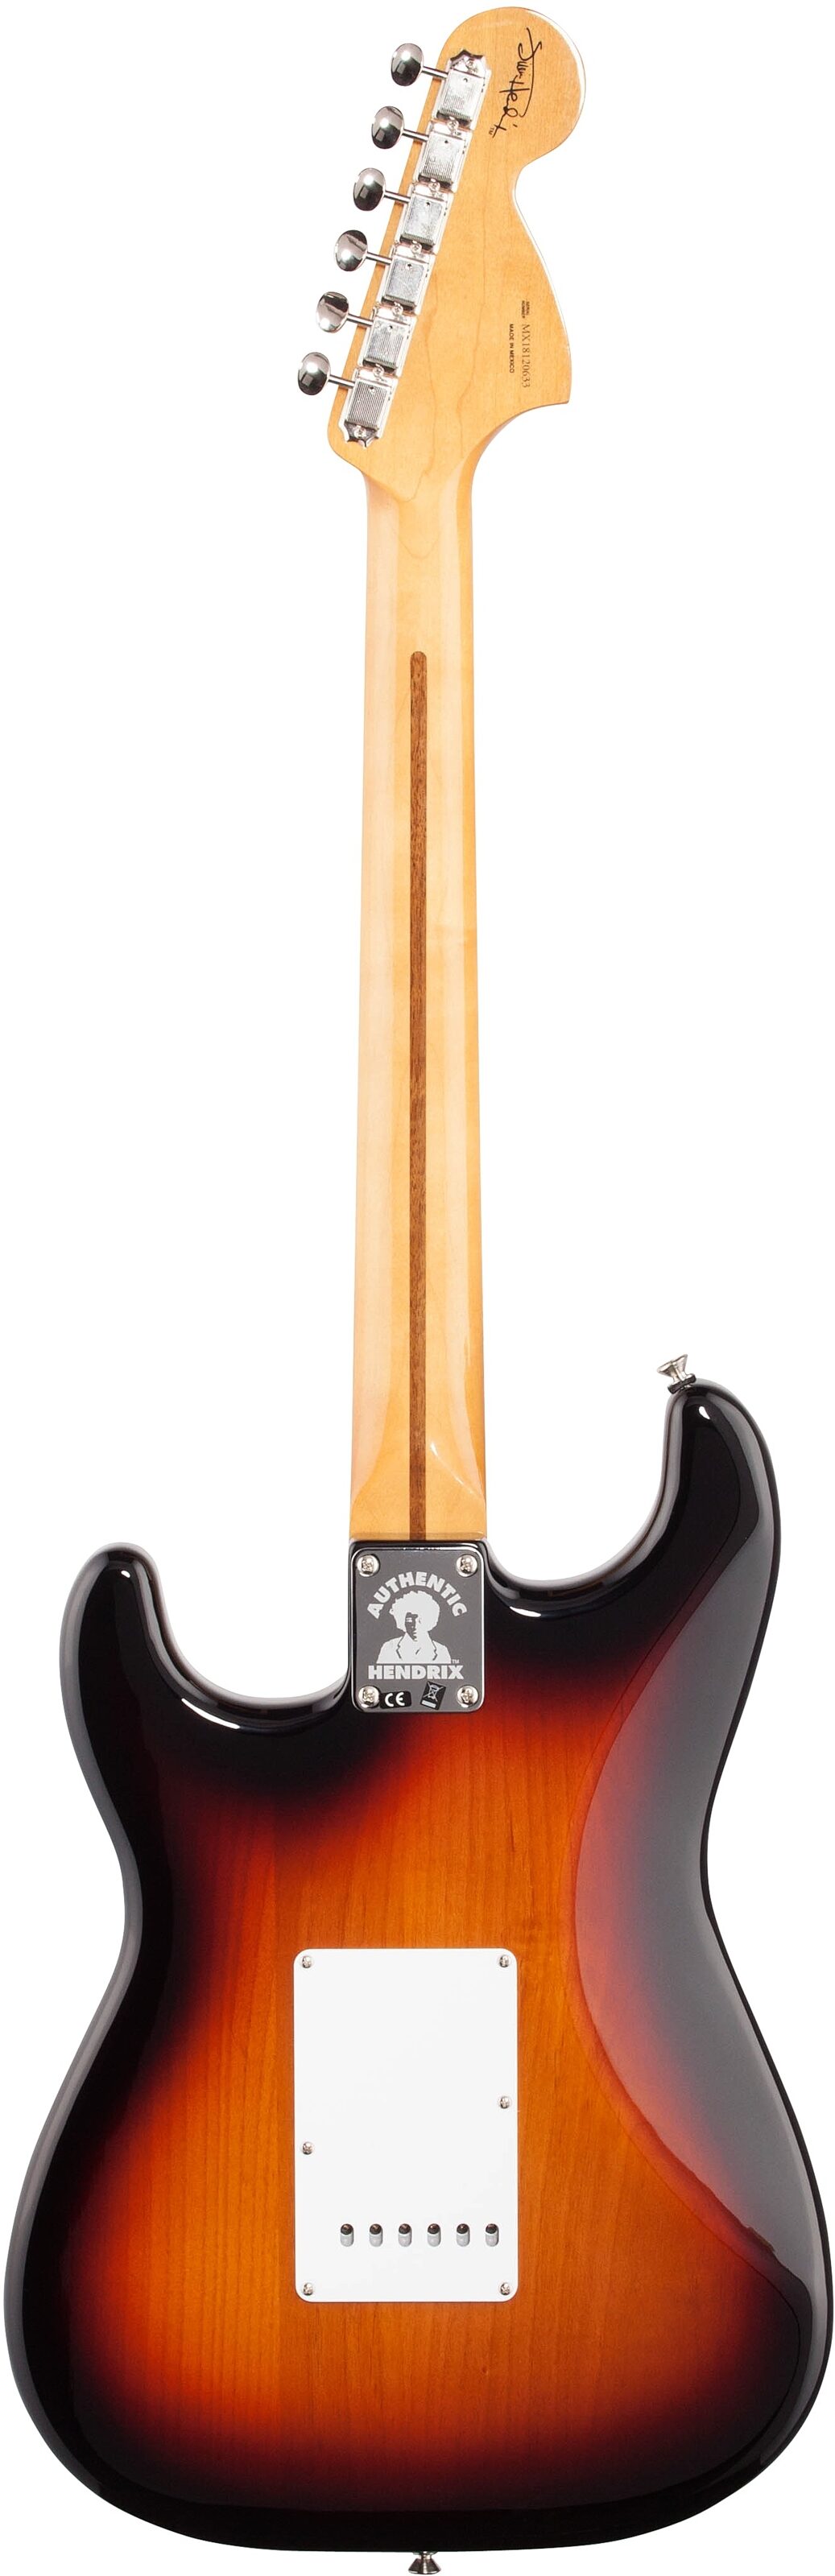 Fender Jimi Hendrix Stratocaster Electric Guitar | zZounds